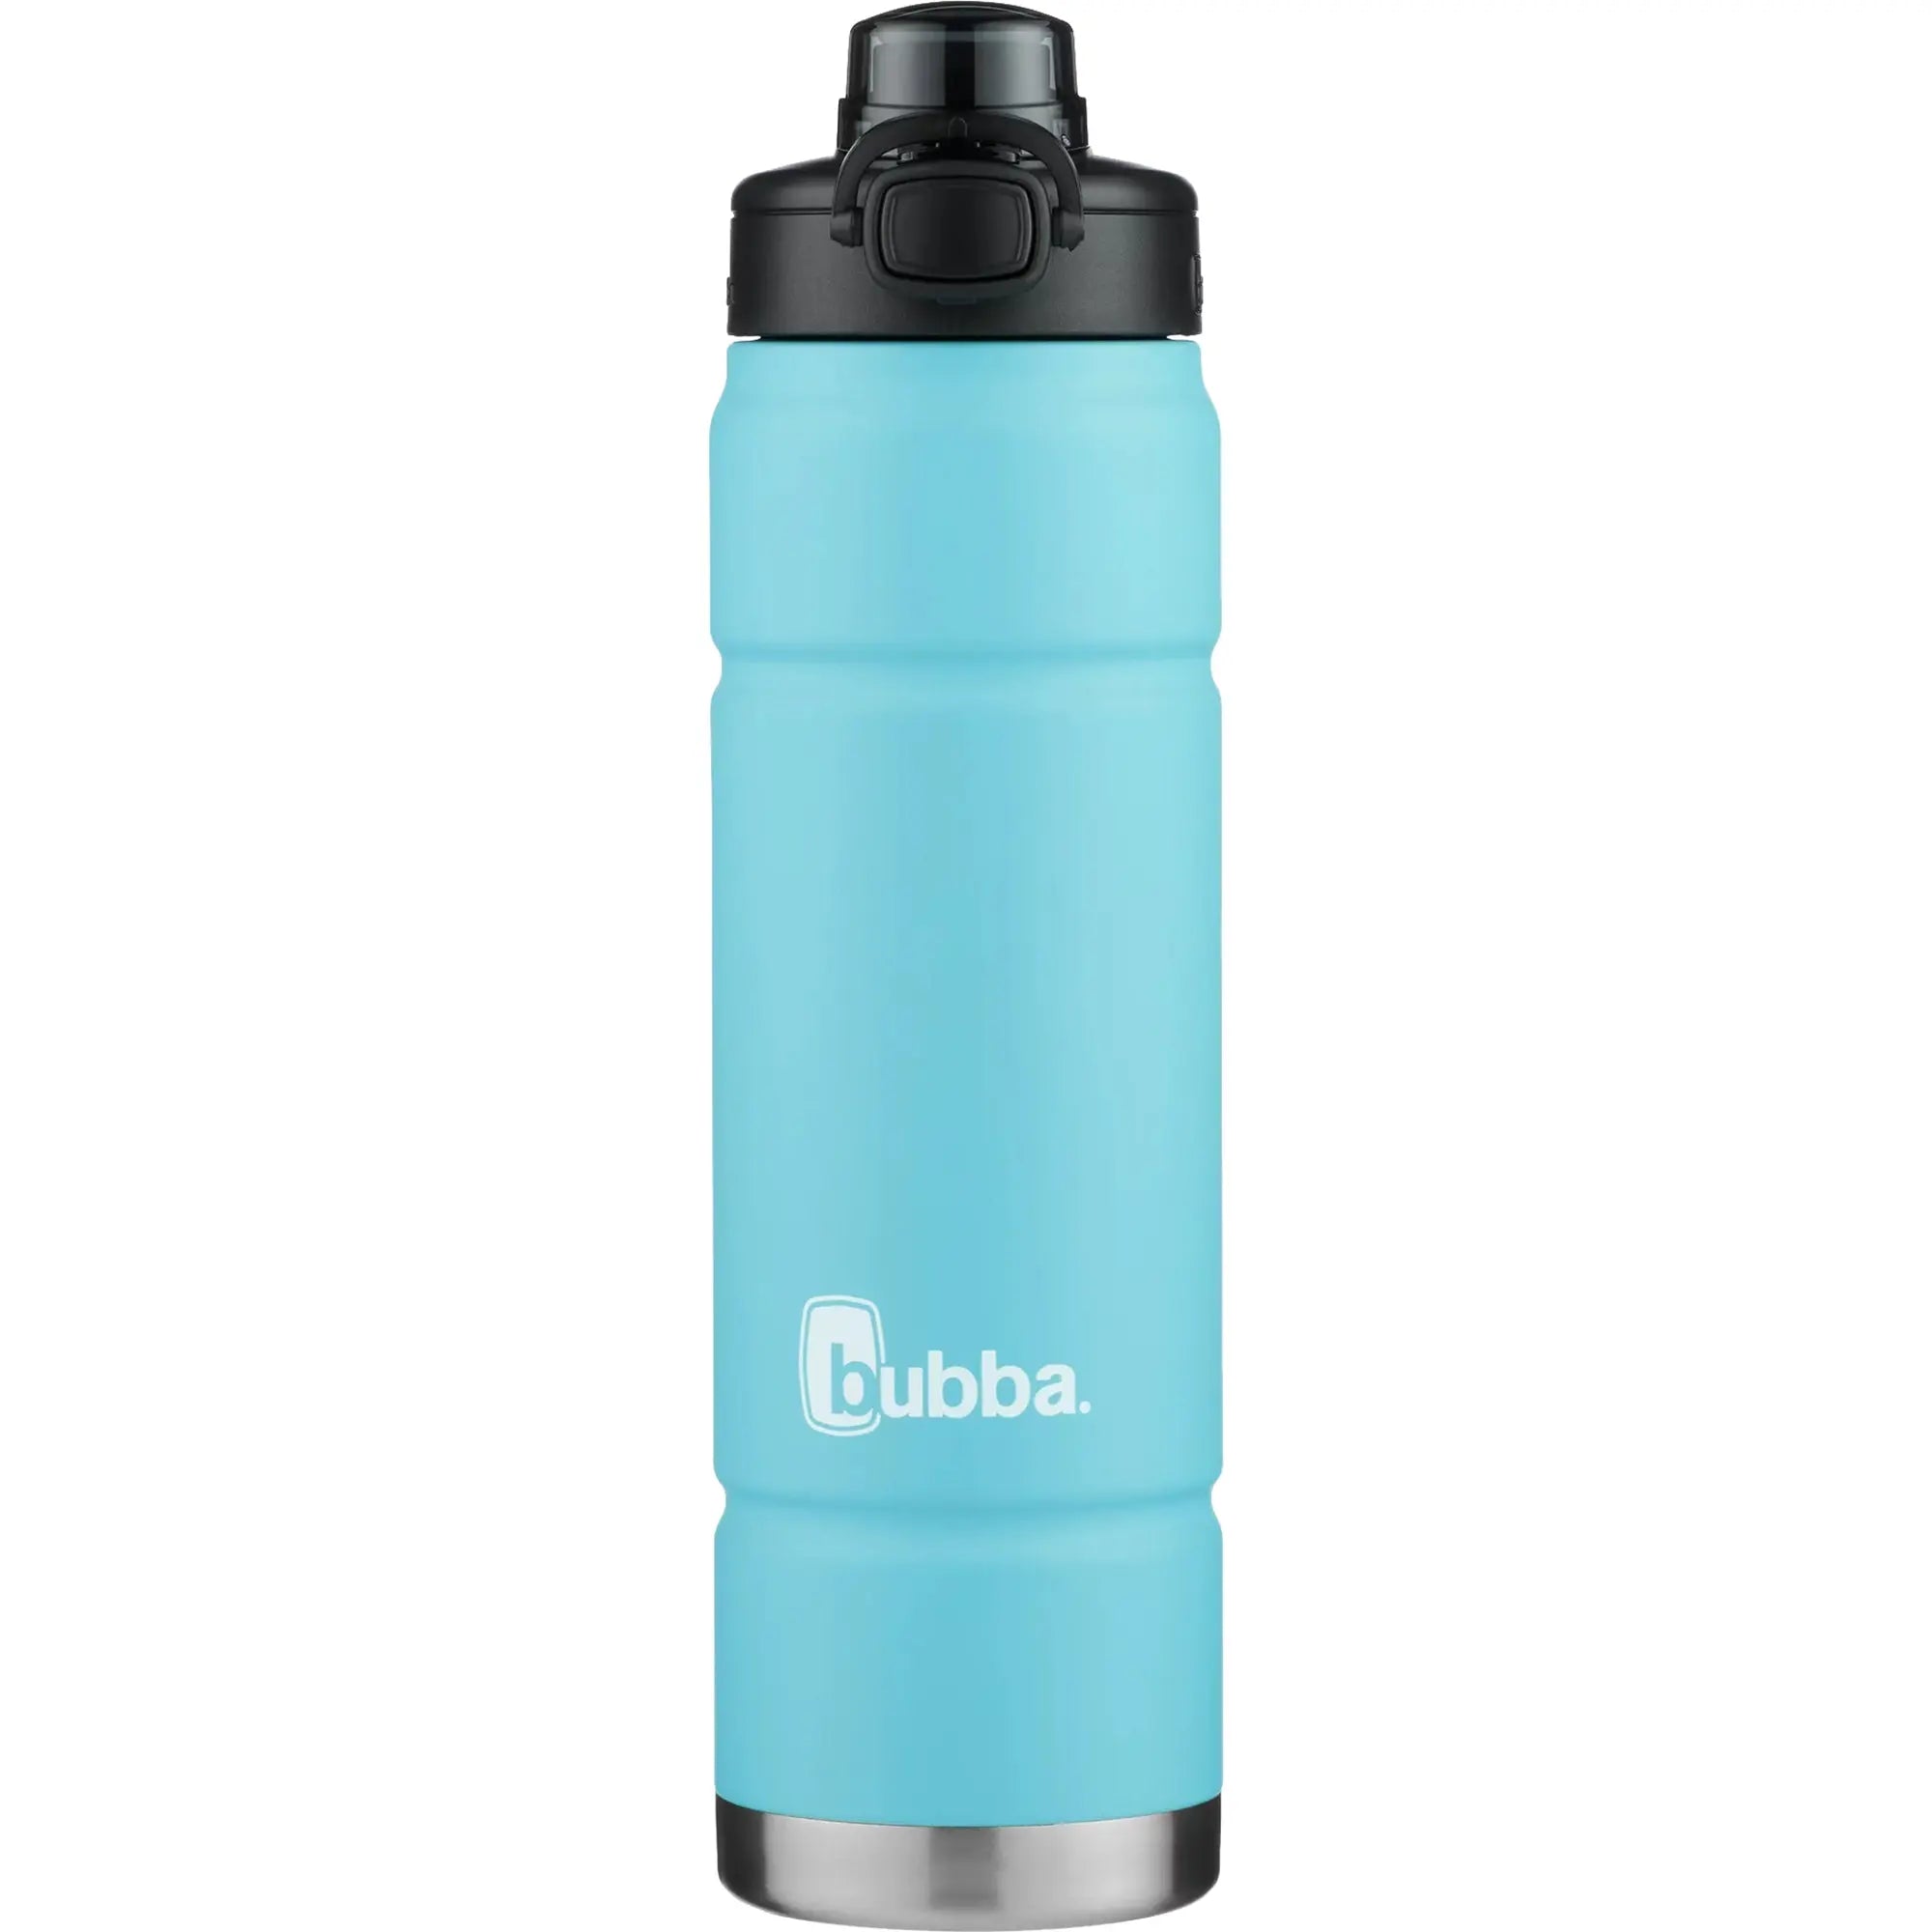 Bubba 24 oz. Trailblazer Insulated Stainless Steel Rubberized Water Bottle Bubba